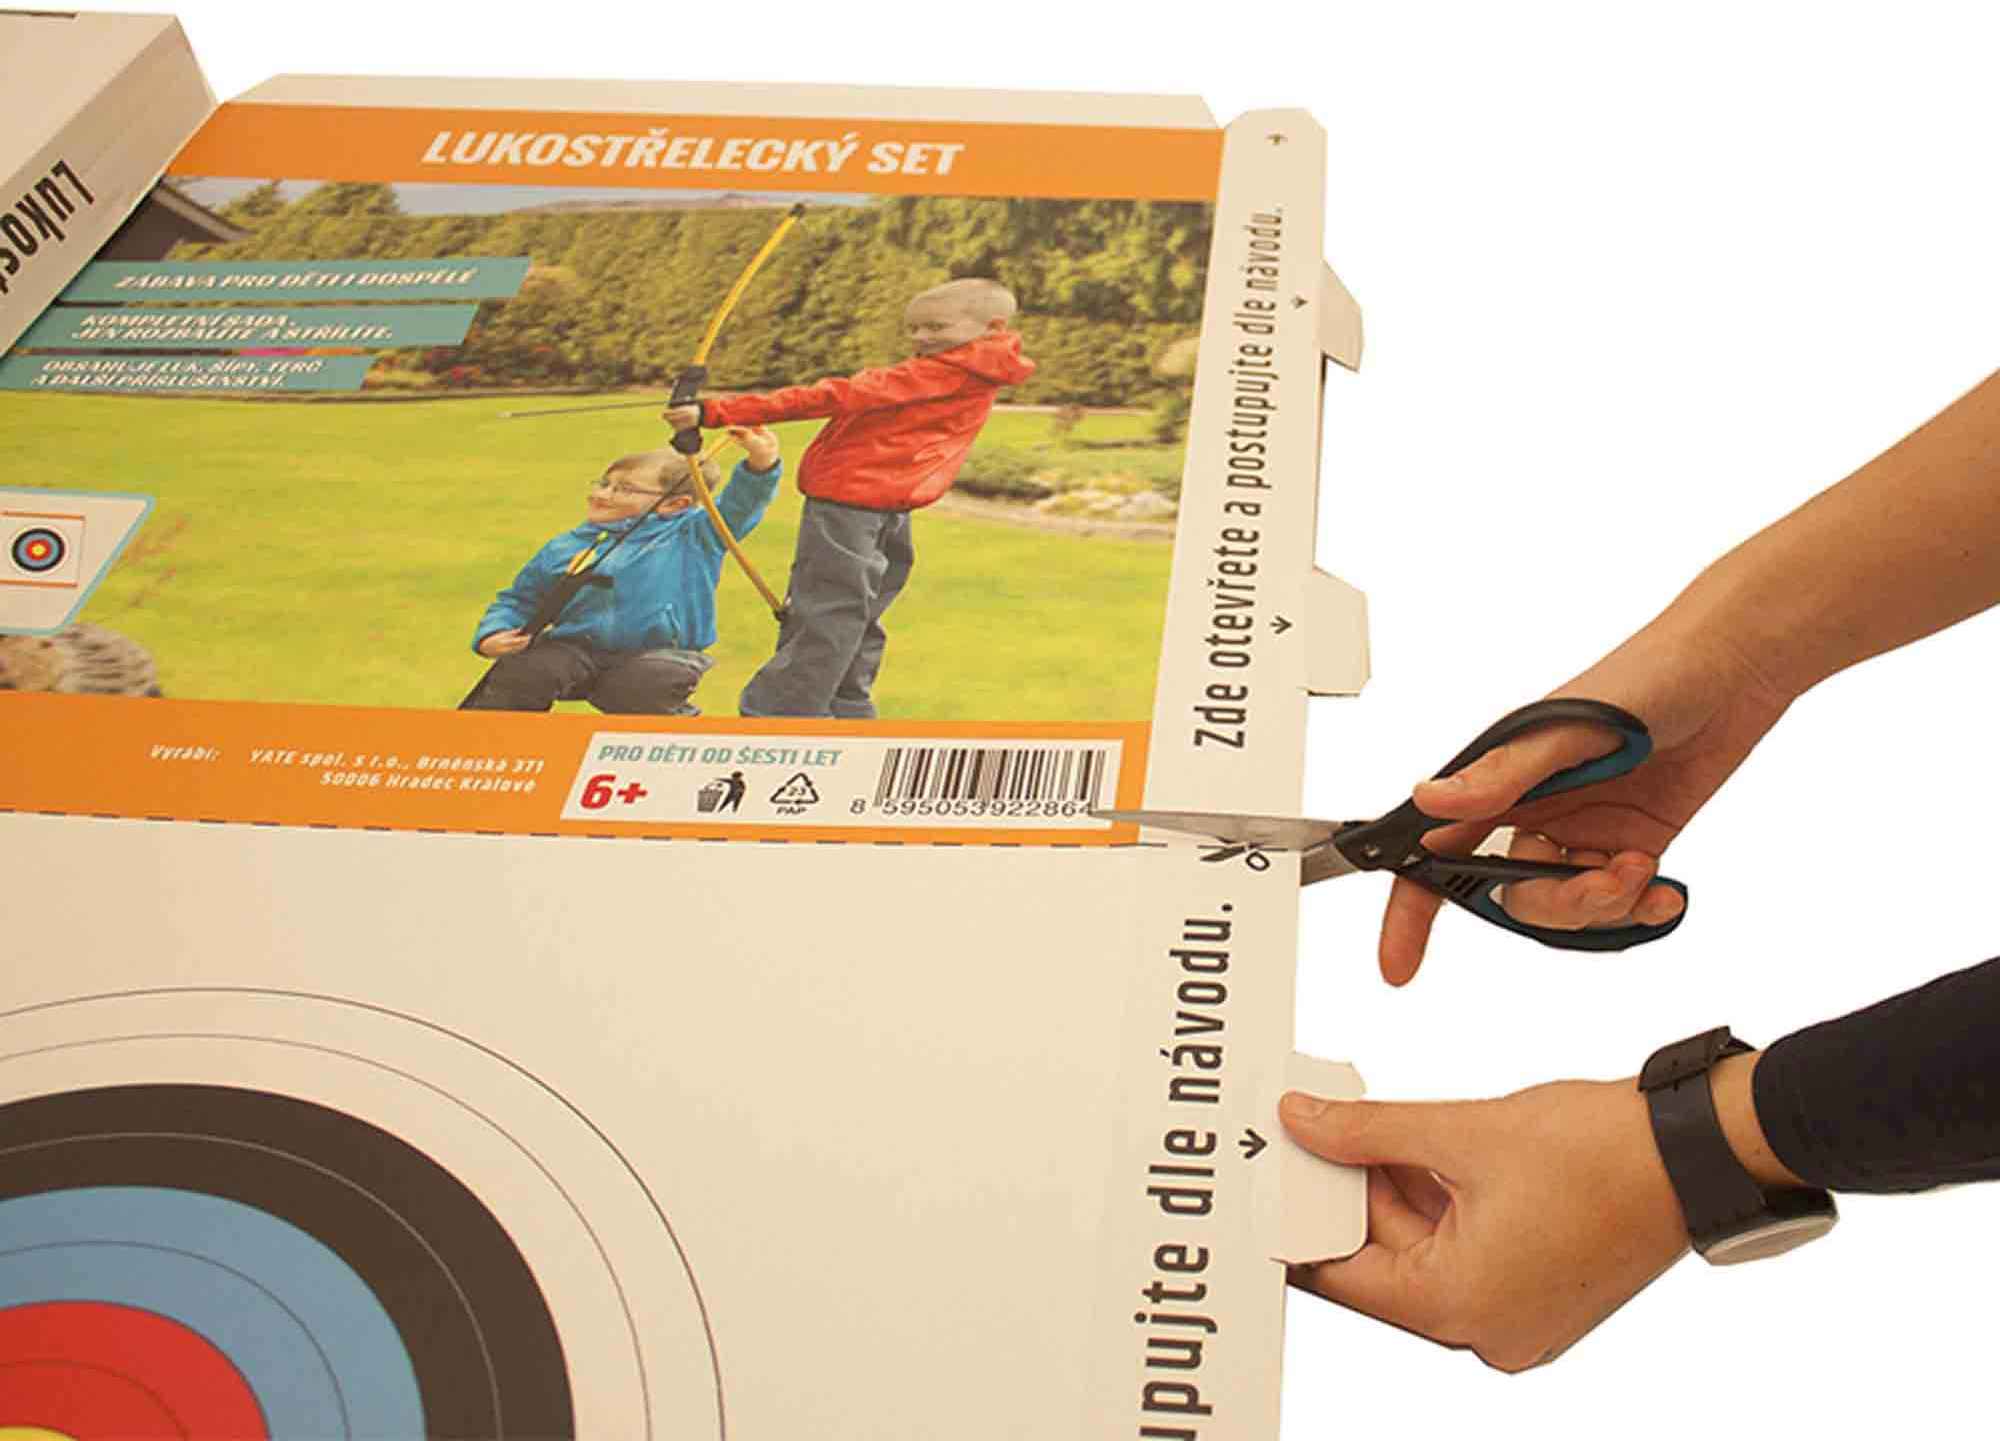 Archery set in a box